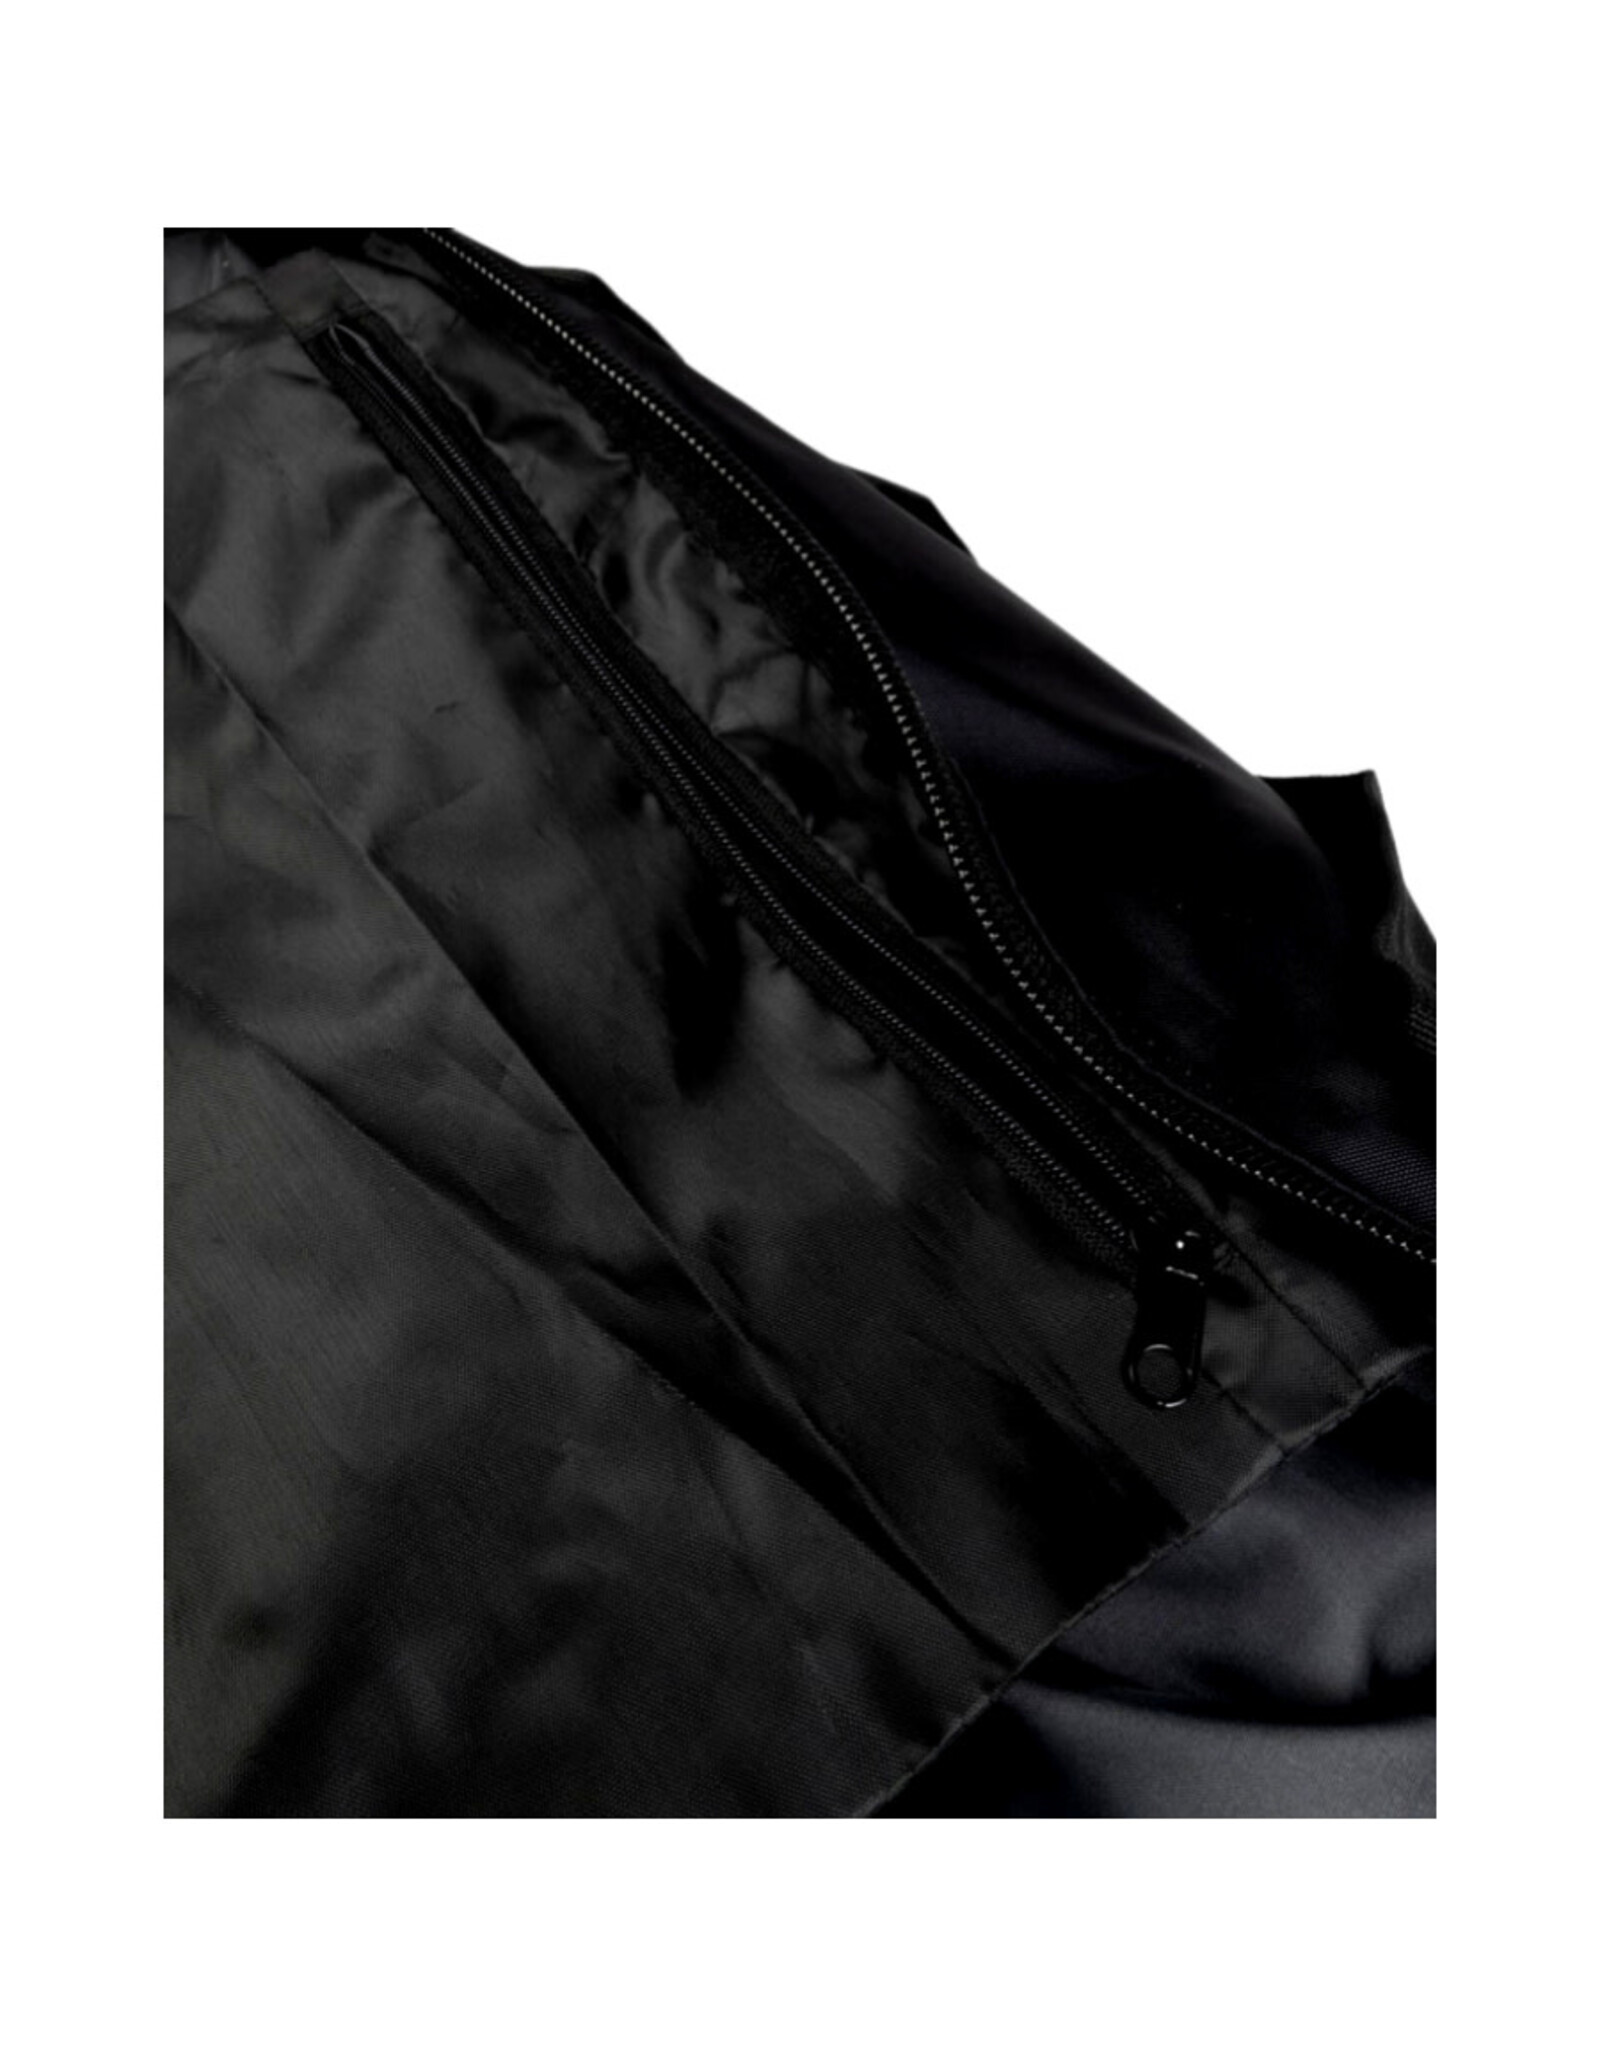 Thrasher Thrasher Bag Logo Duffel (Black)